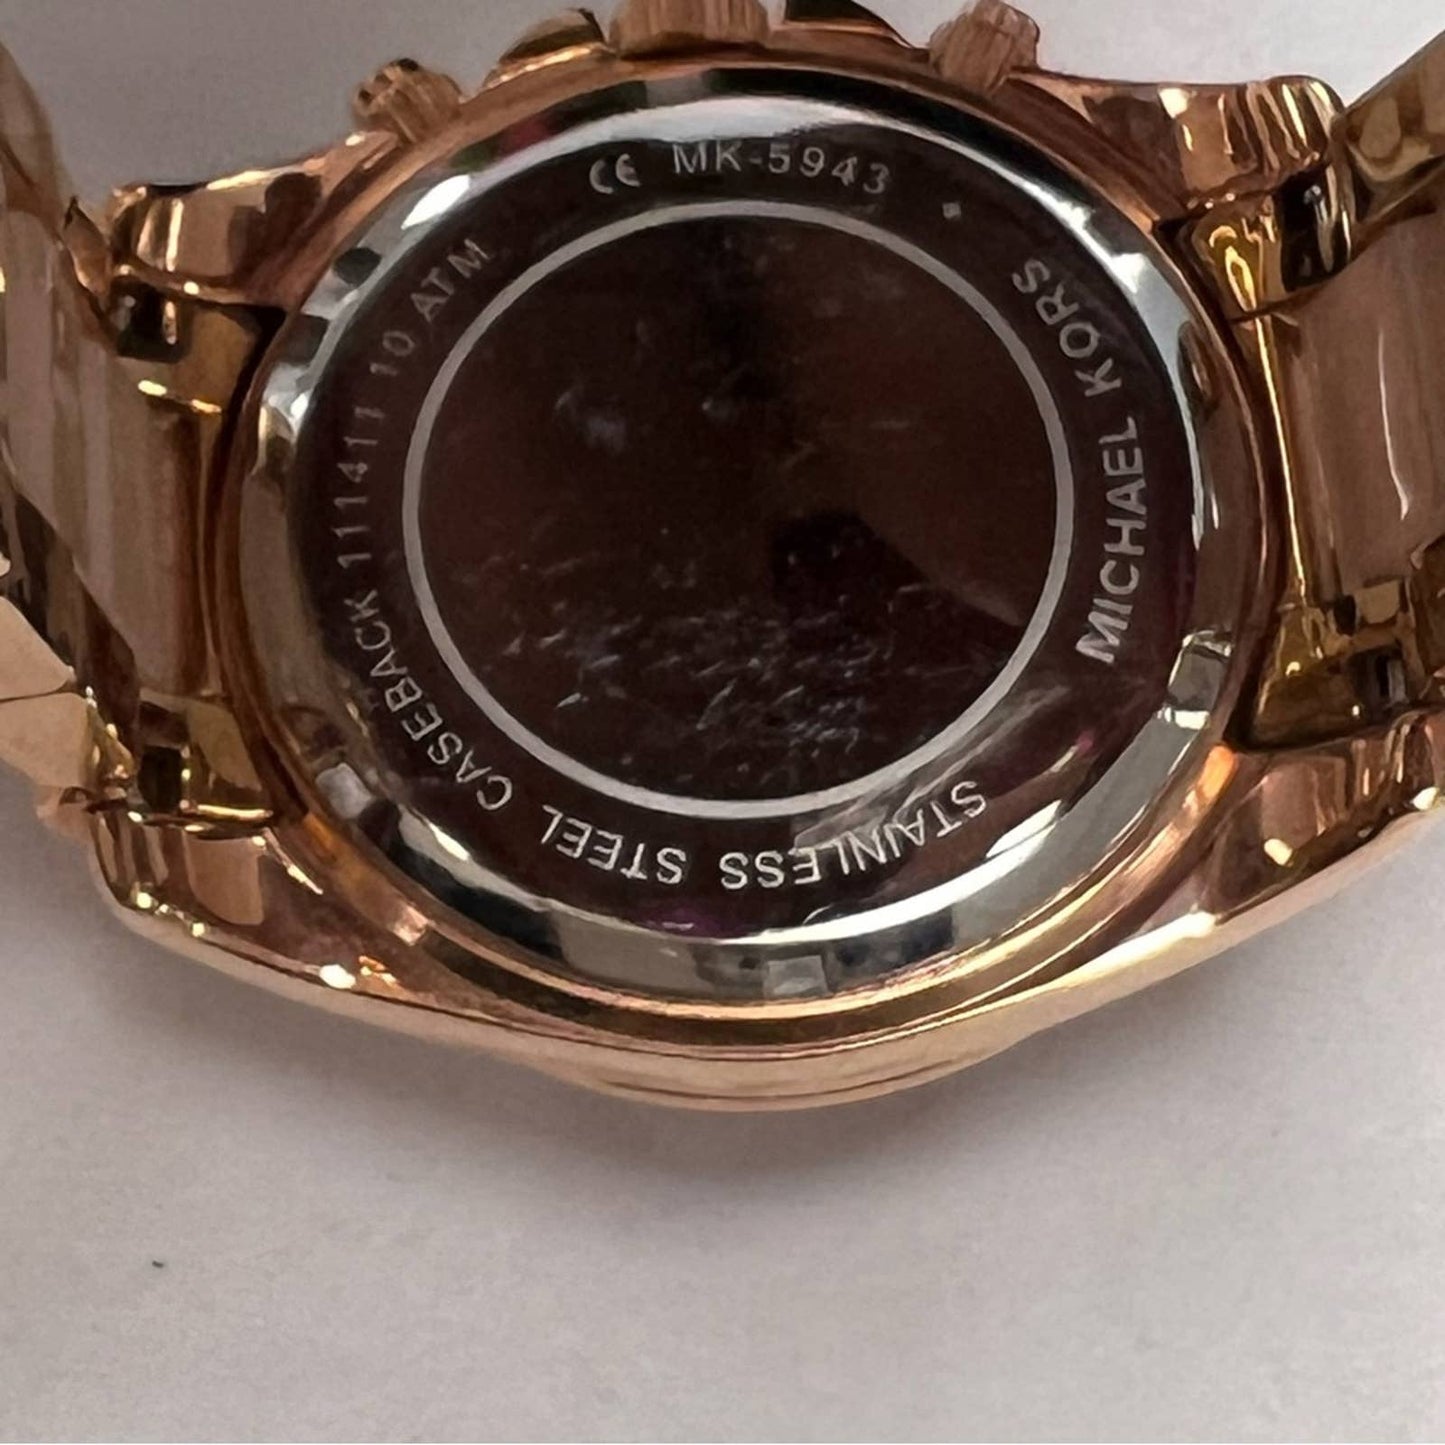 Michael Kors rose gold quarts watch